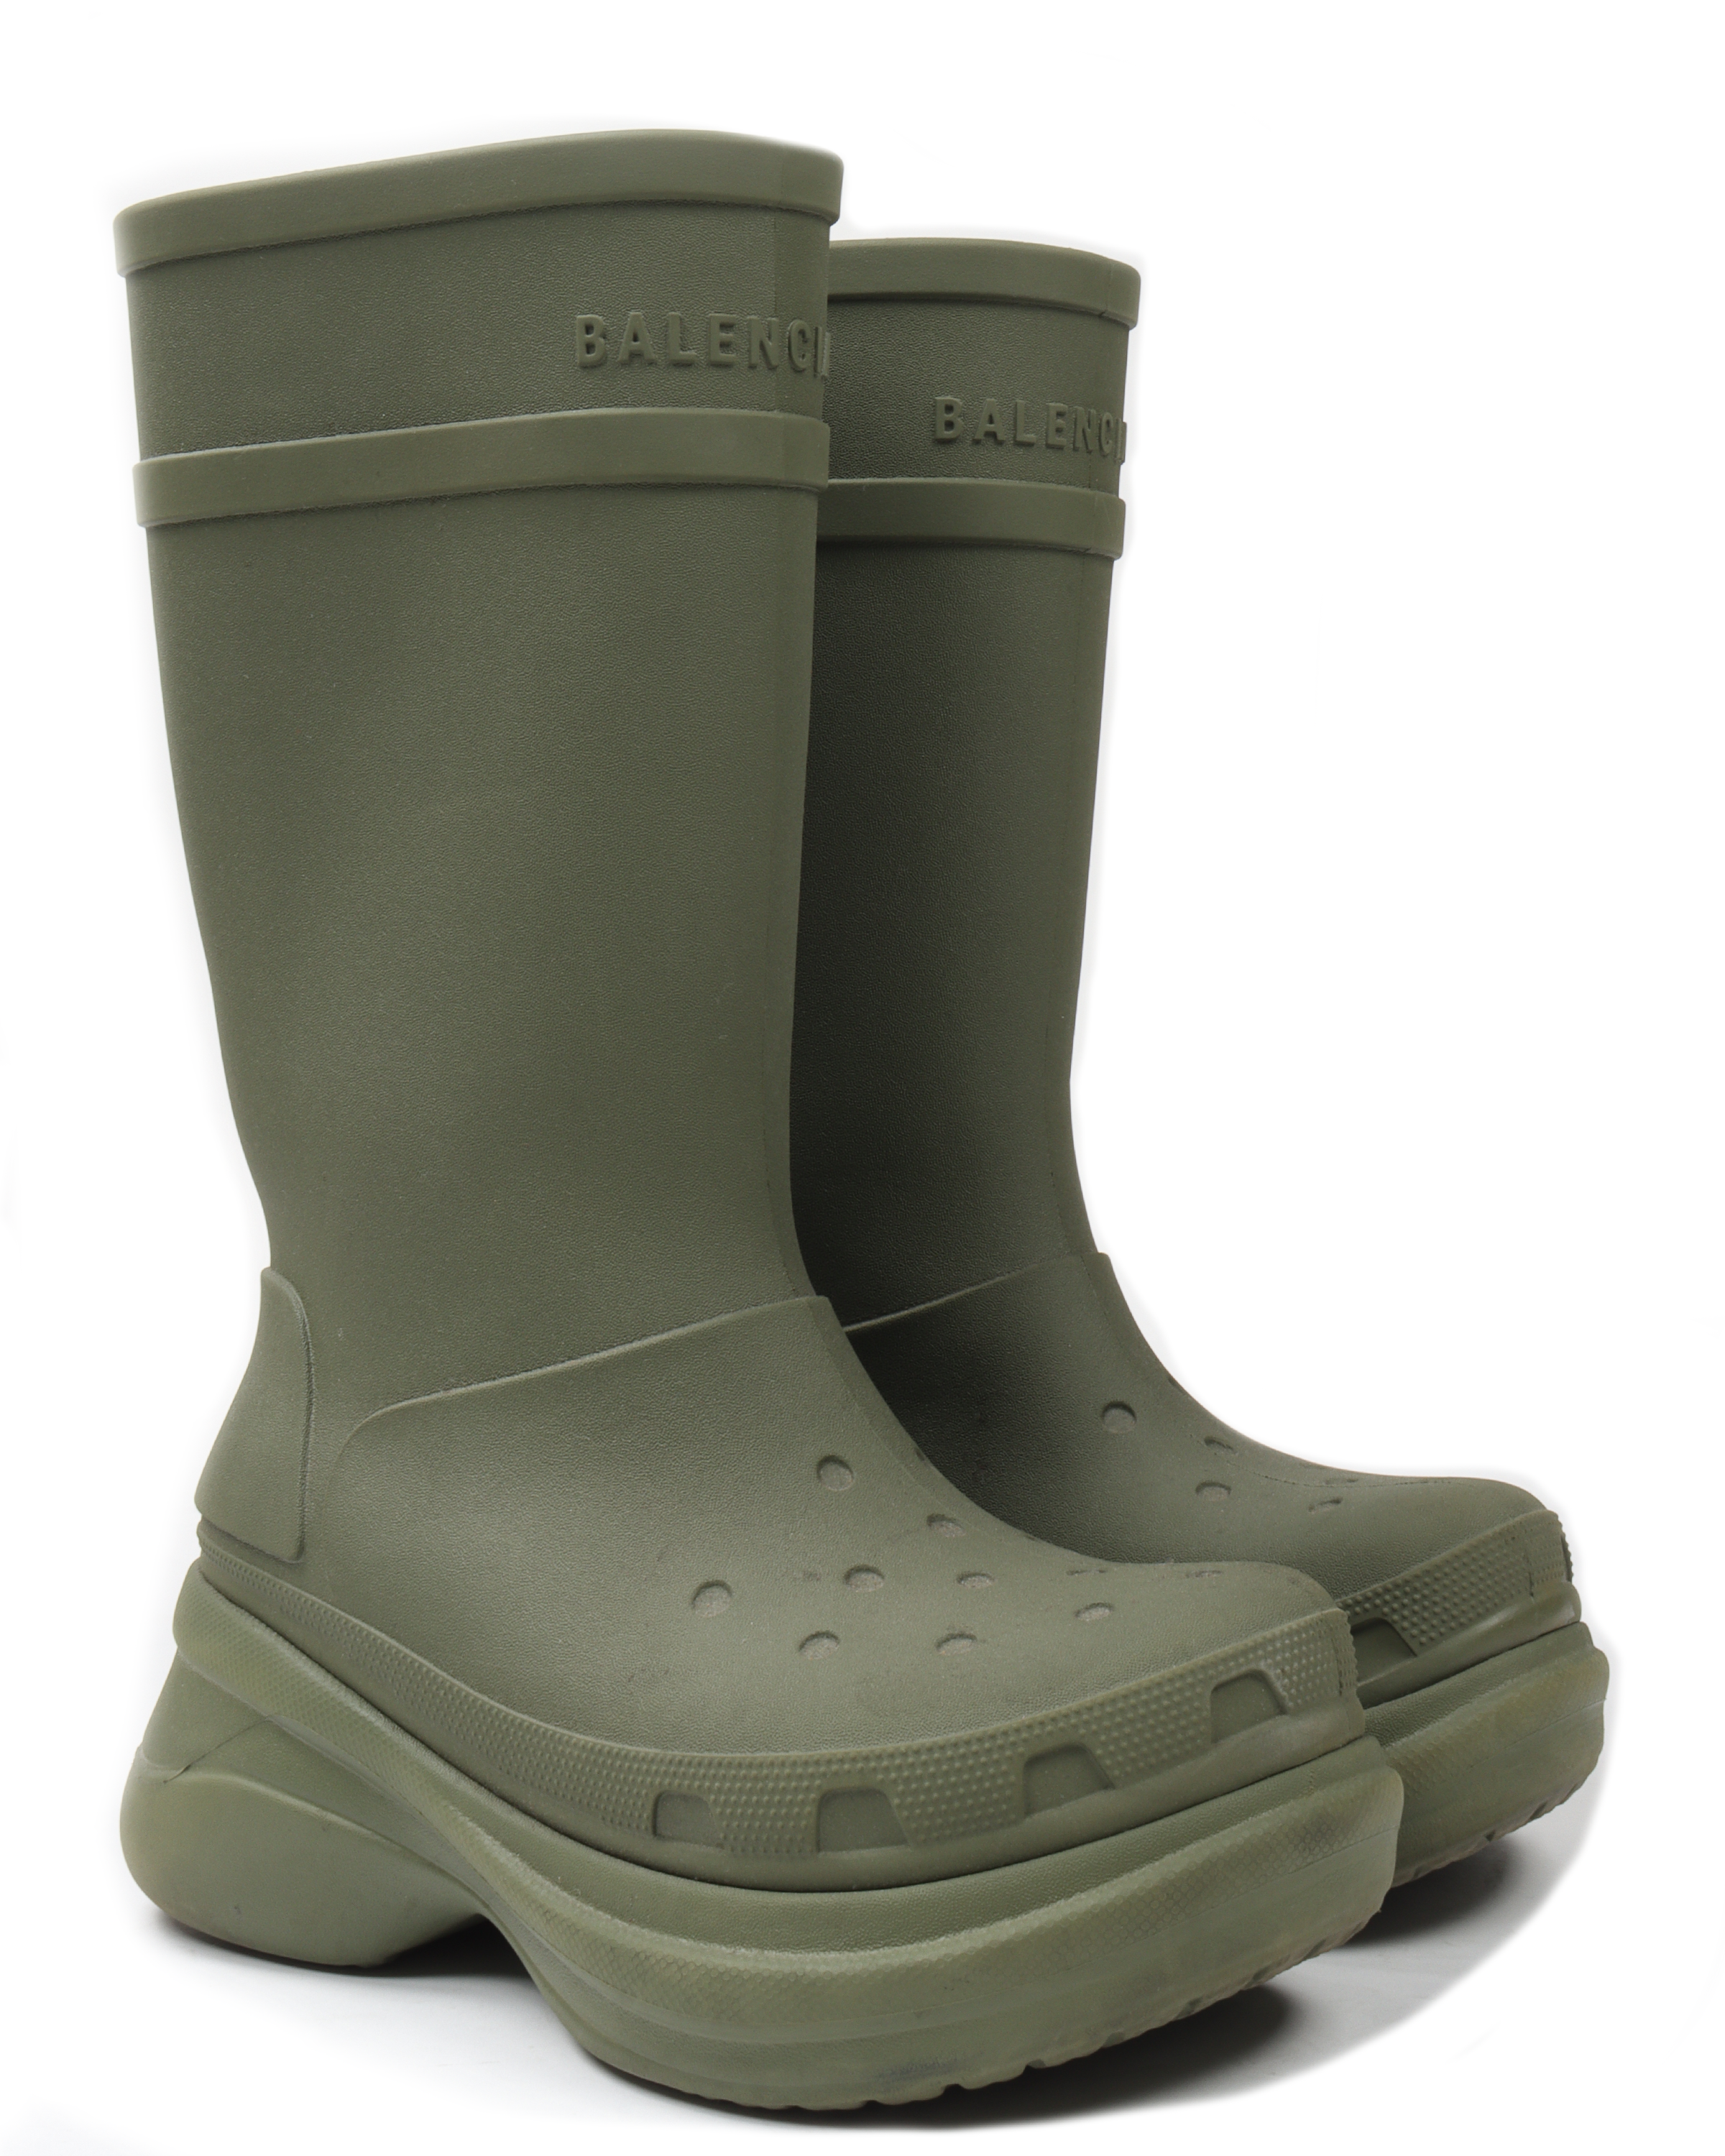 Croc Rubber Rain Boots